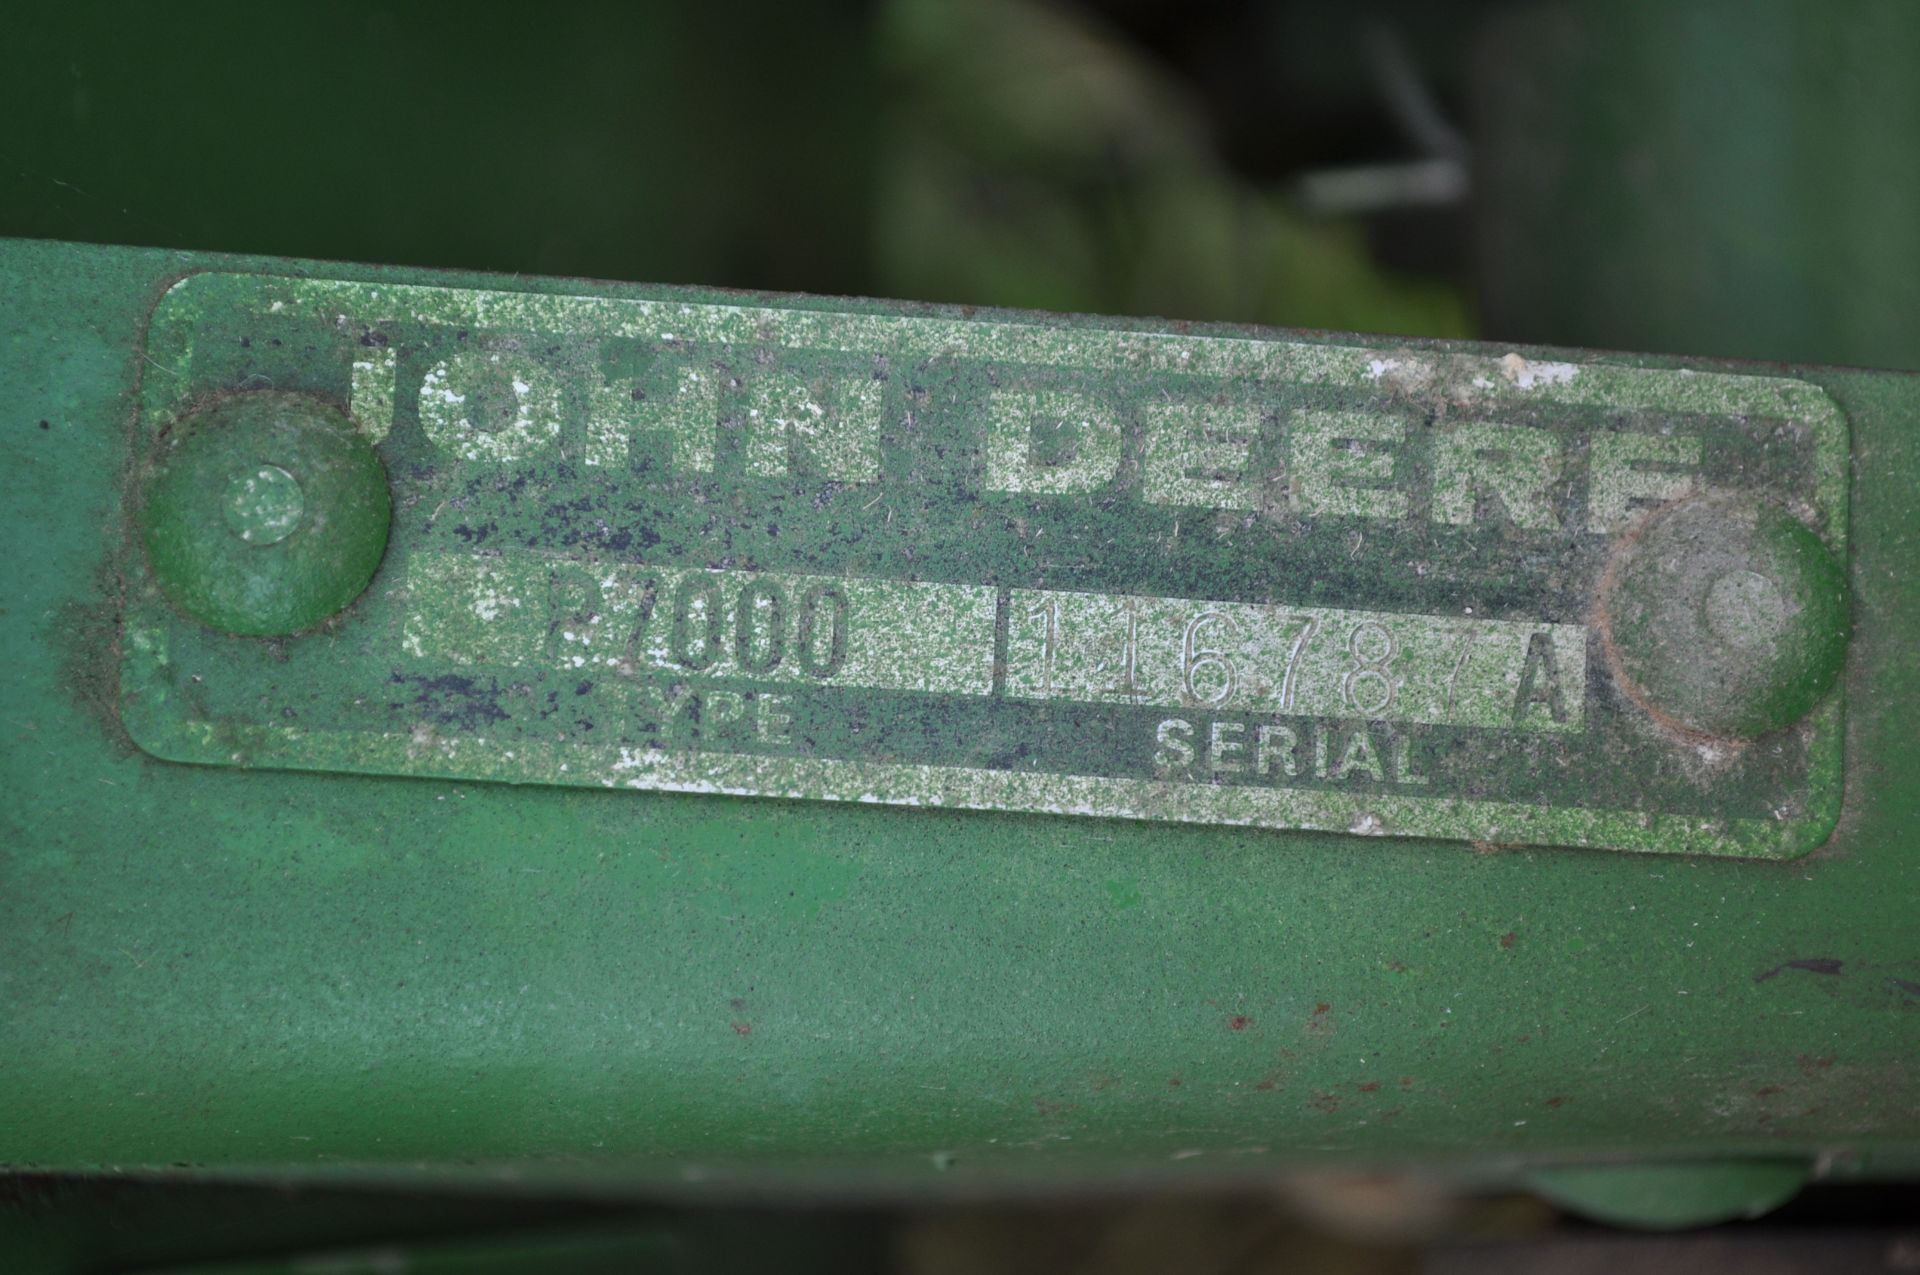 John Deere 7000 convervation corn planter, 6 row x 30”, no-till coulters, dry fert - Image 14 of 20